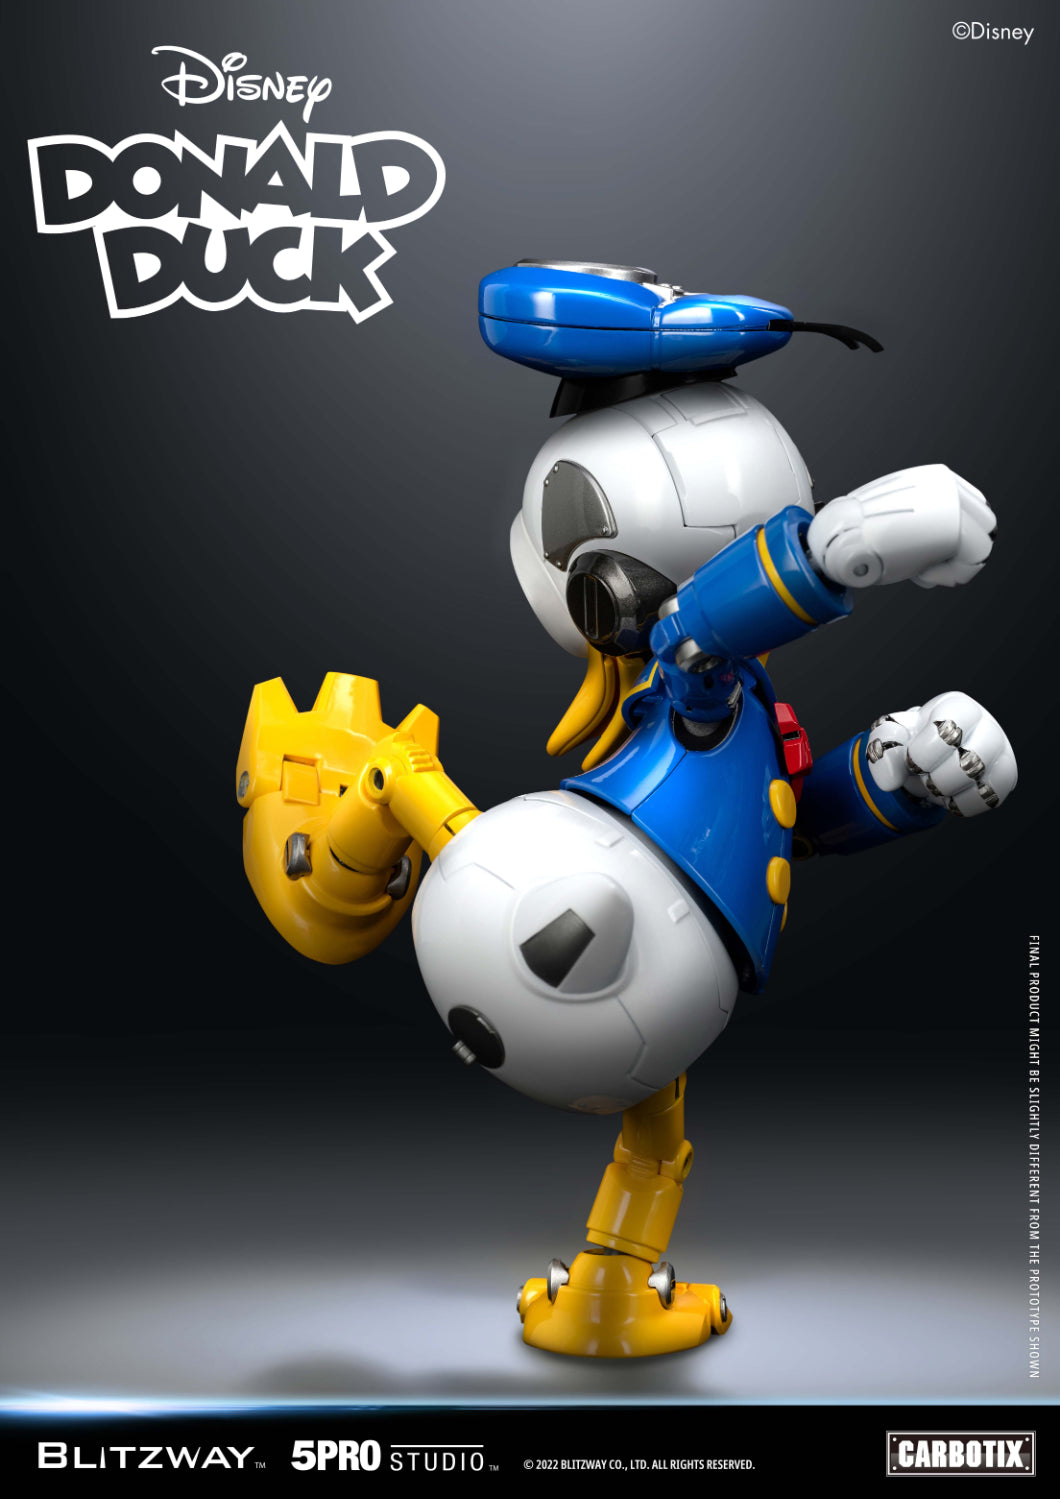 Disney BLITZWAY 合金機械 ドナルドダック フィギュア - 知育玩具